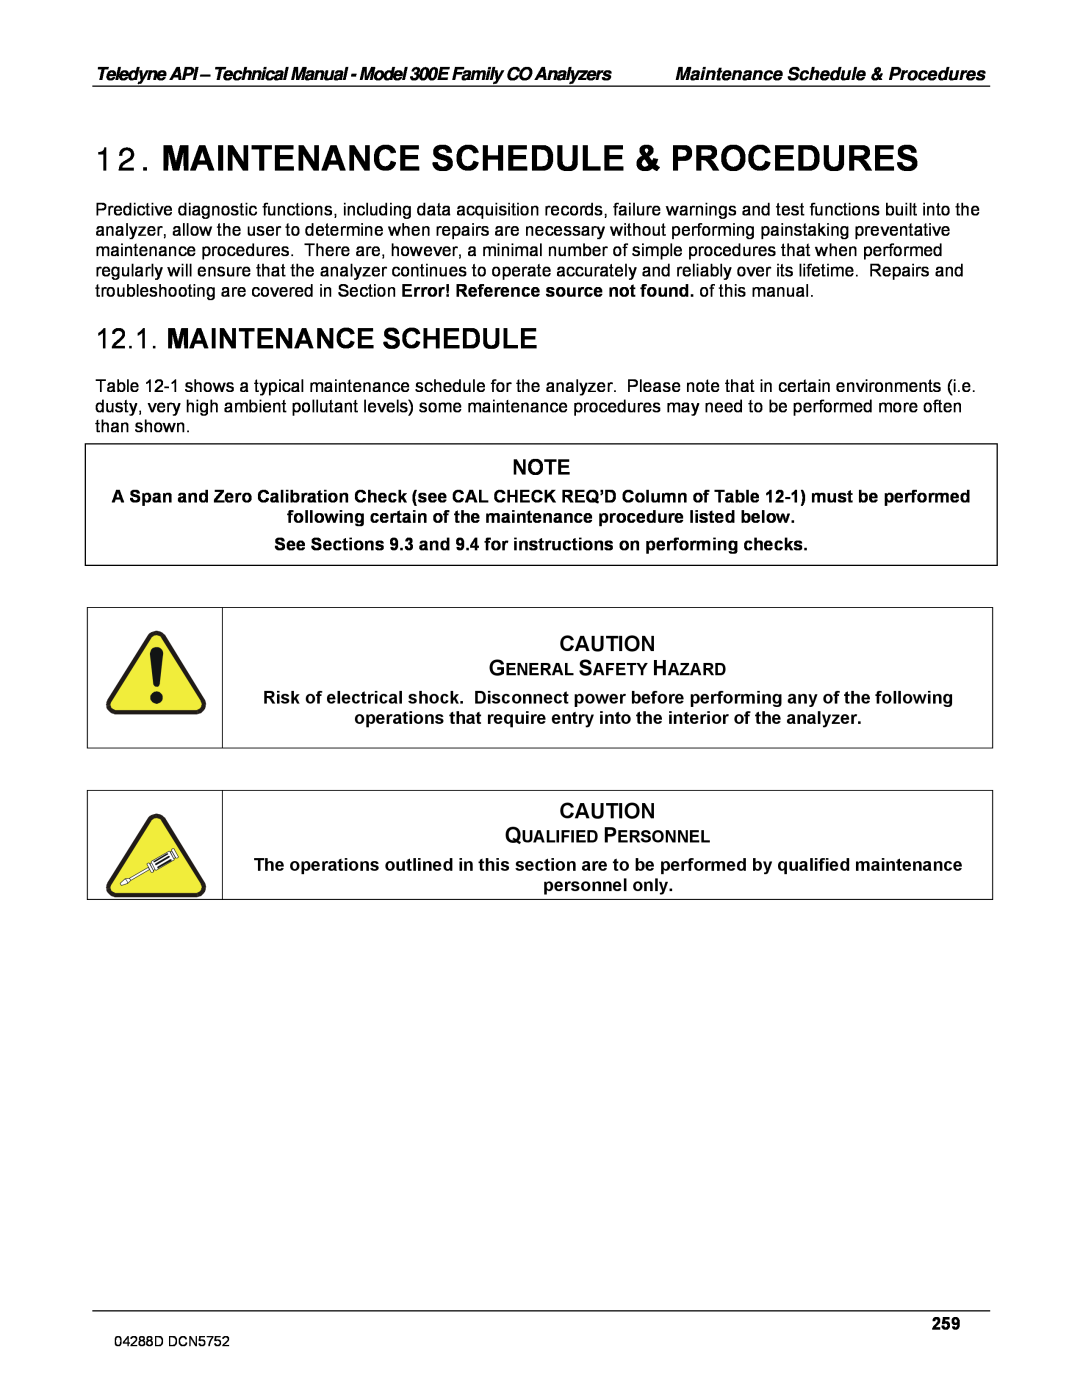 Teledyne M300EM Maintenance Schedule & Procedures, General Safety Hazard, Qualified Personnel, personnel only 259 